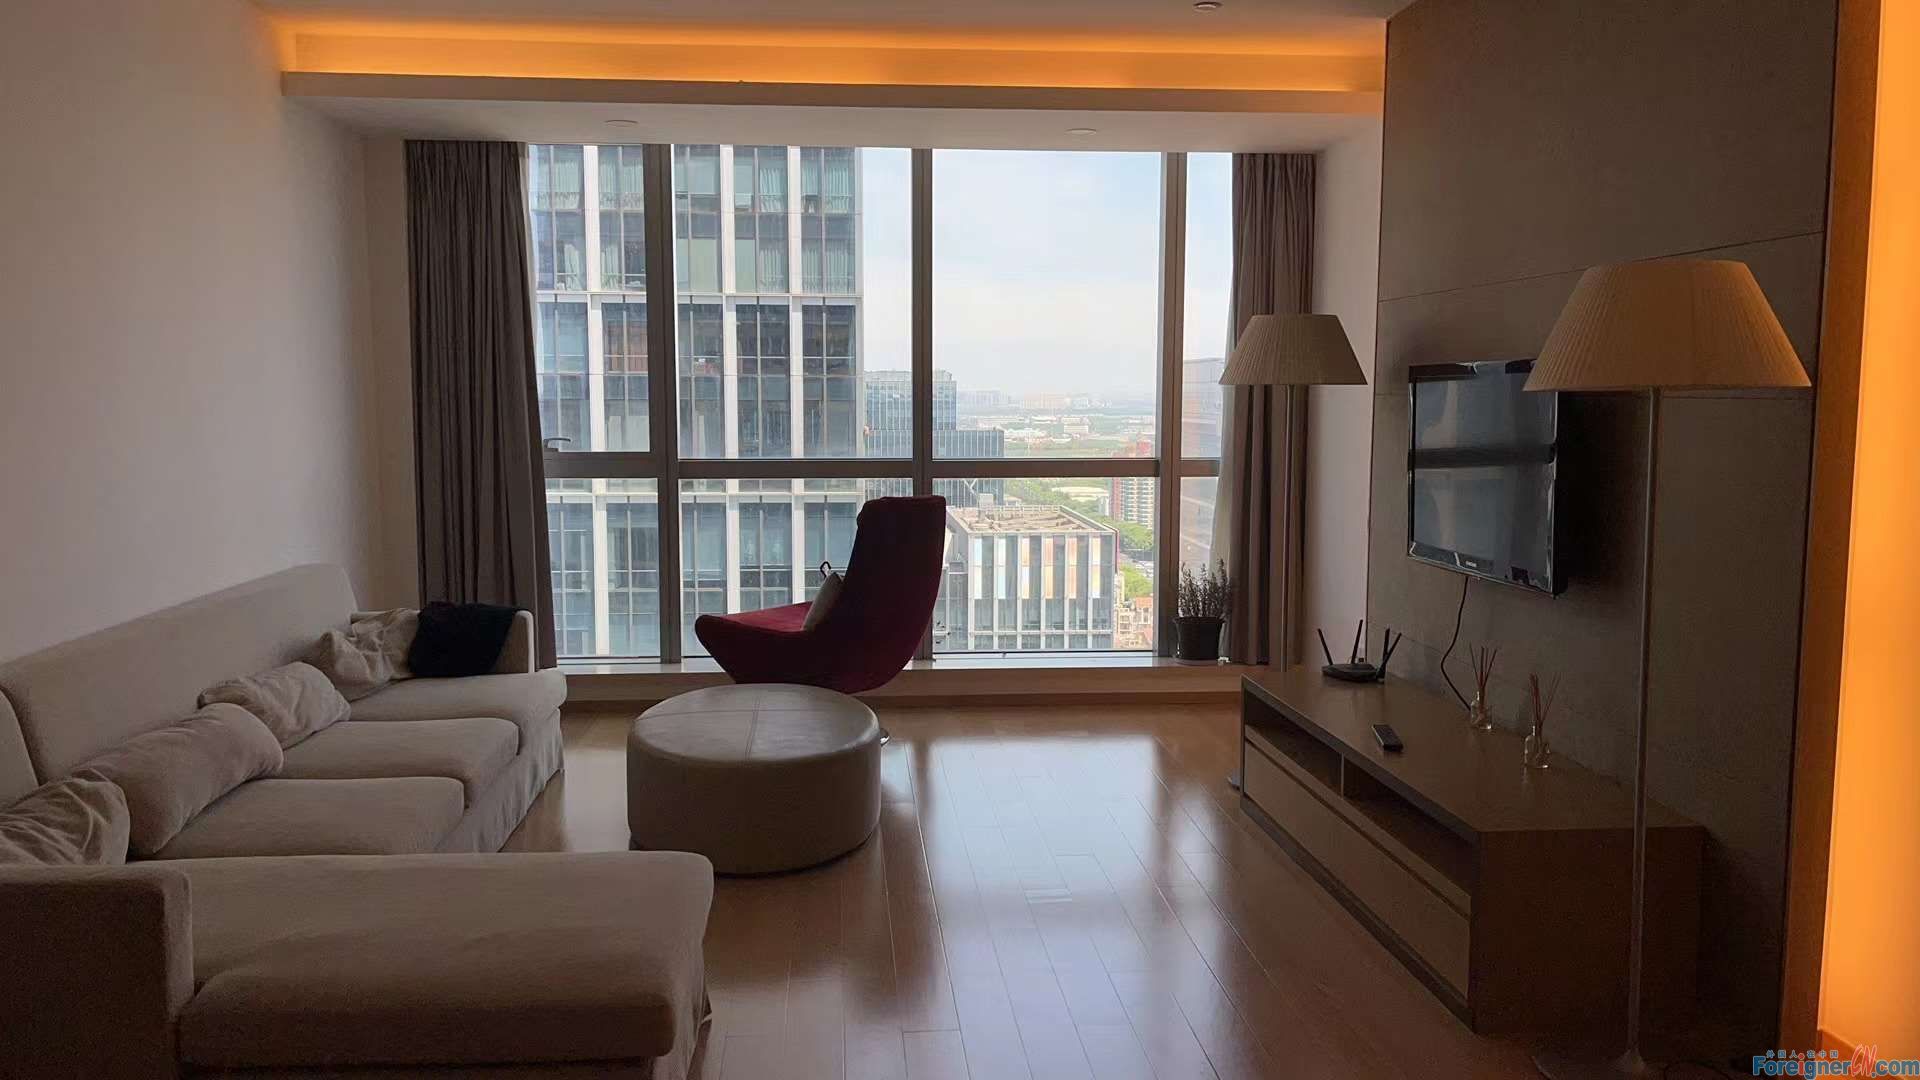 Global 188 apartment - outdoor pool - 3 bedrooms